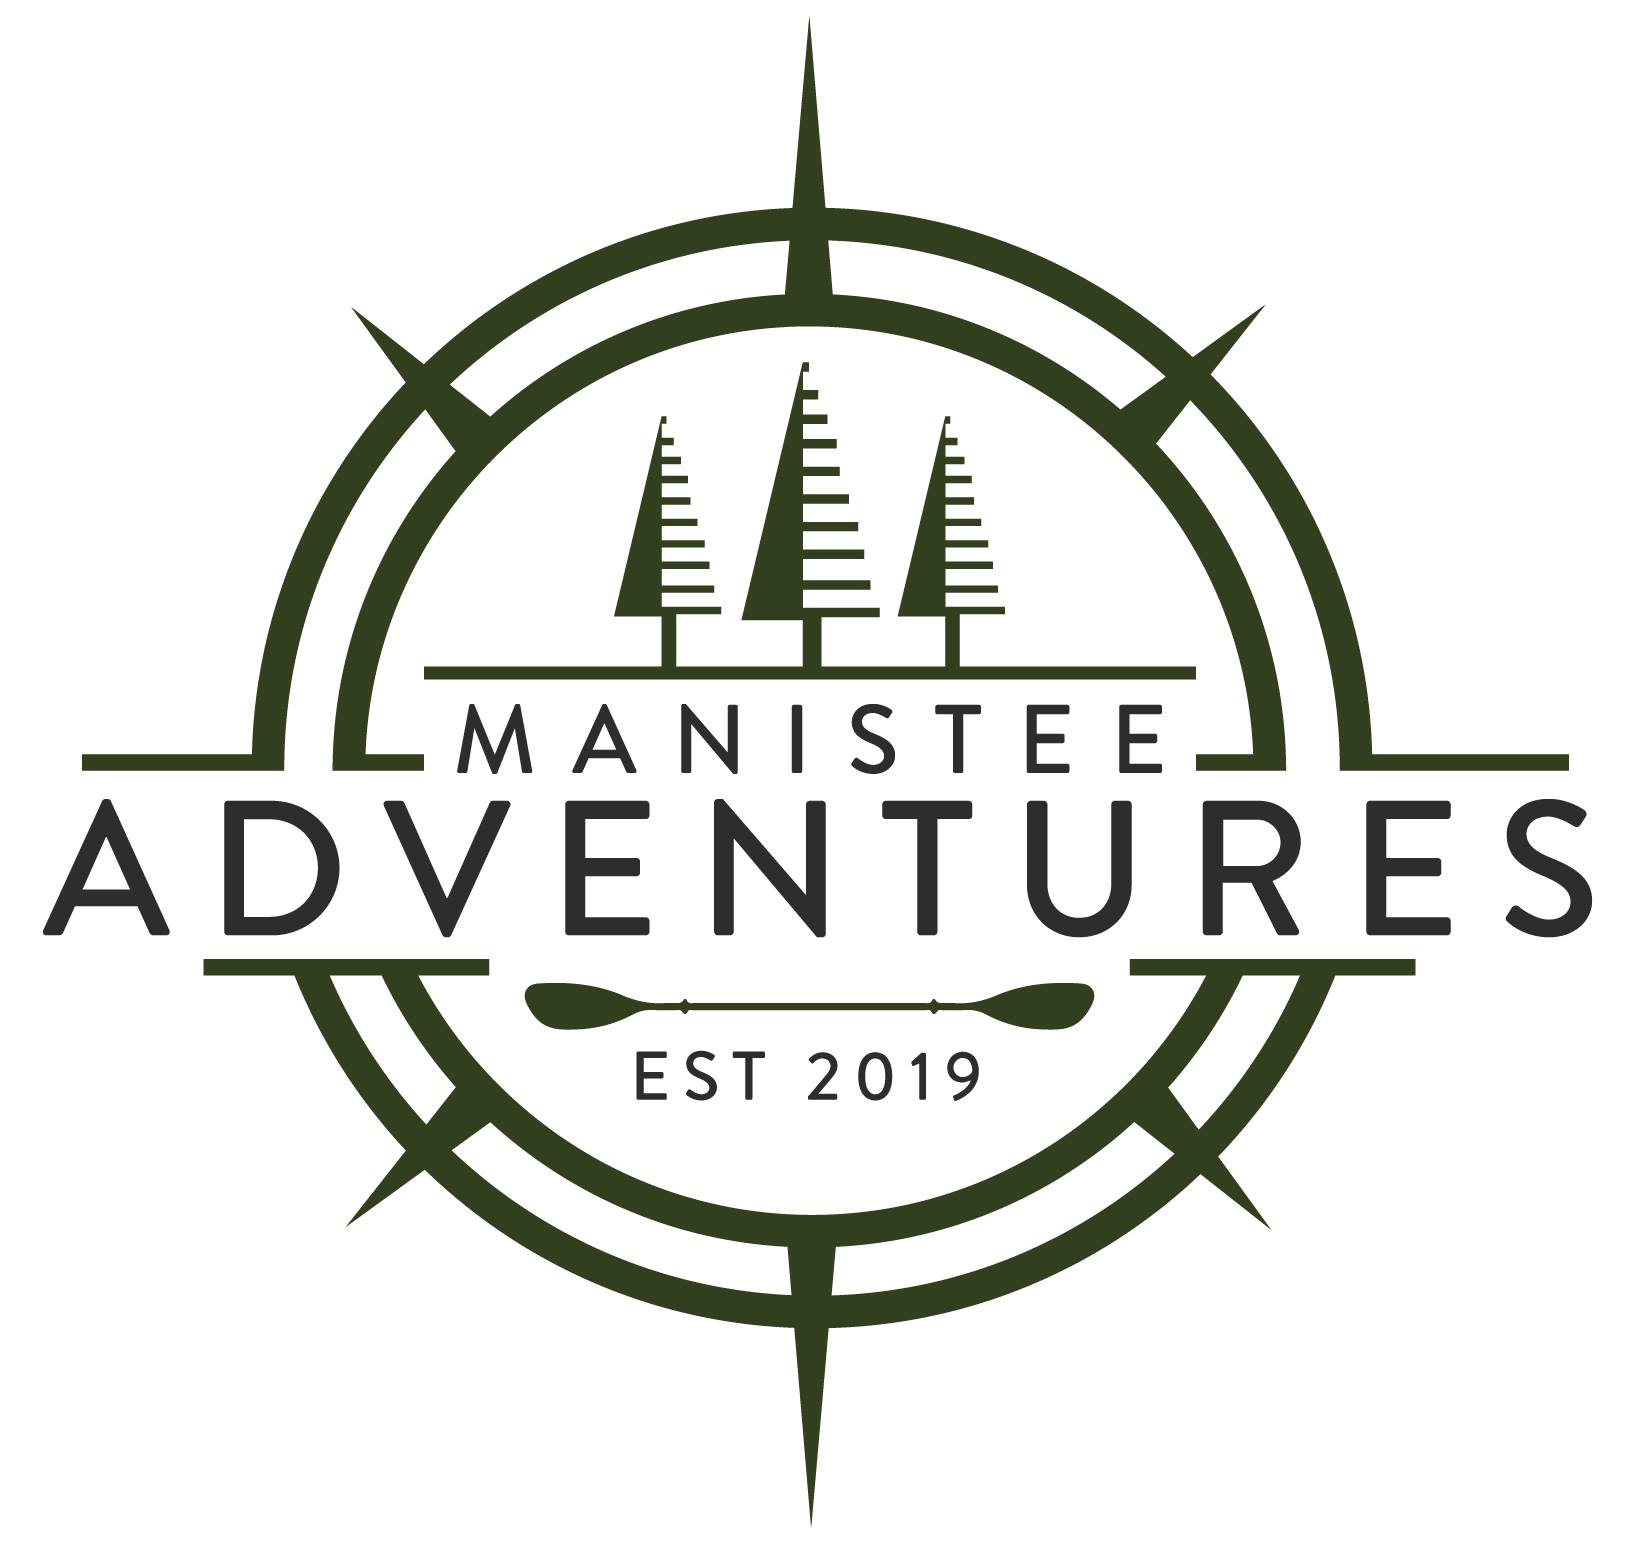 Manistee Adventures